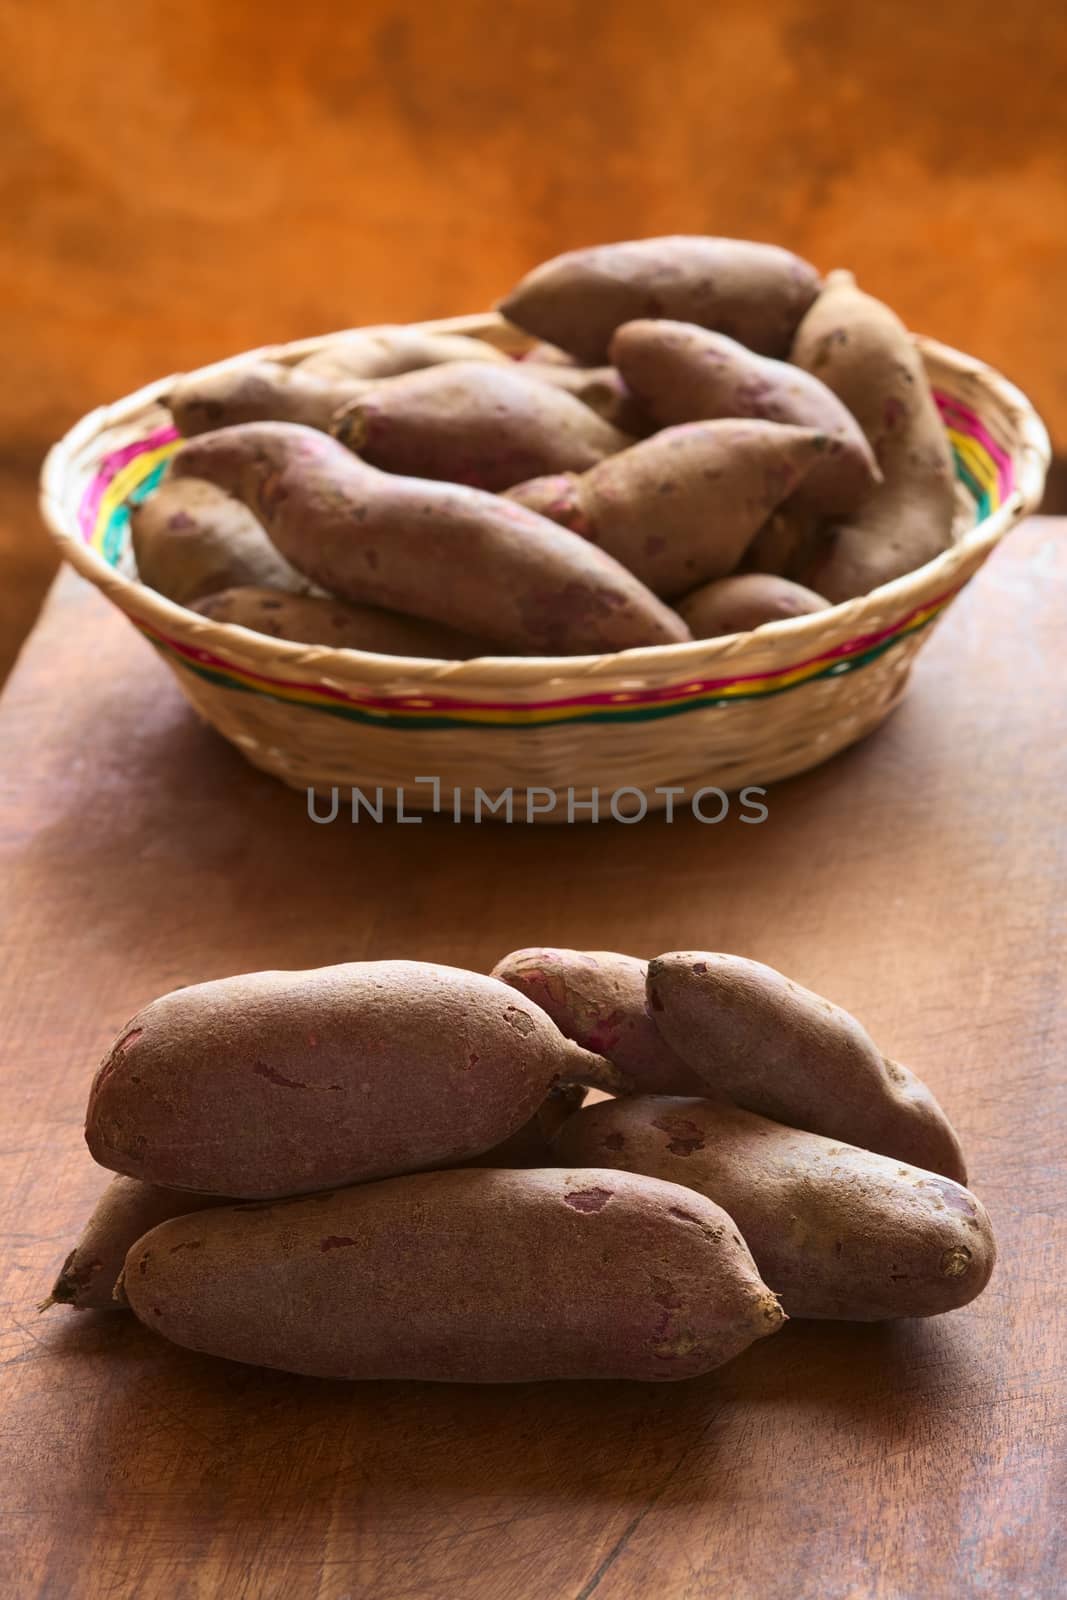 Purple Sweet Potato by ildi